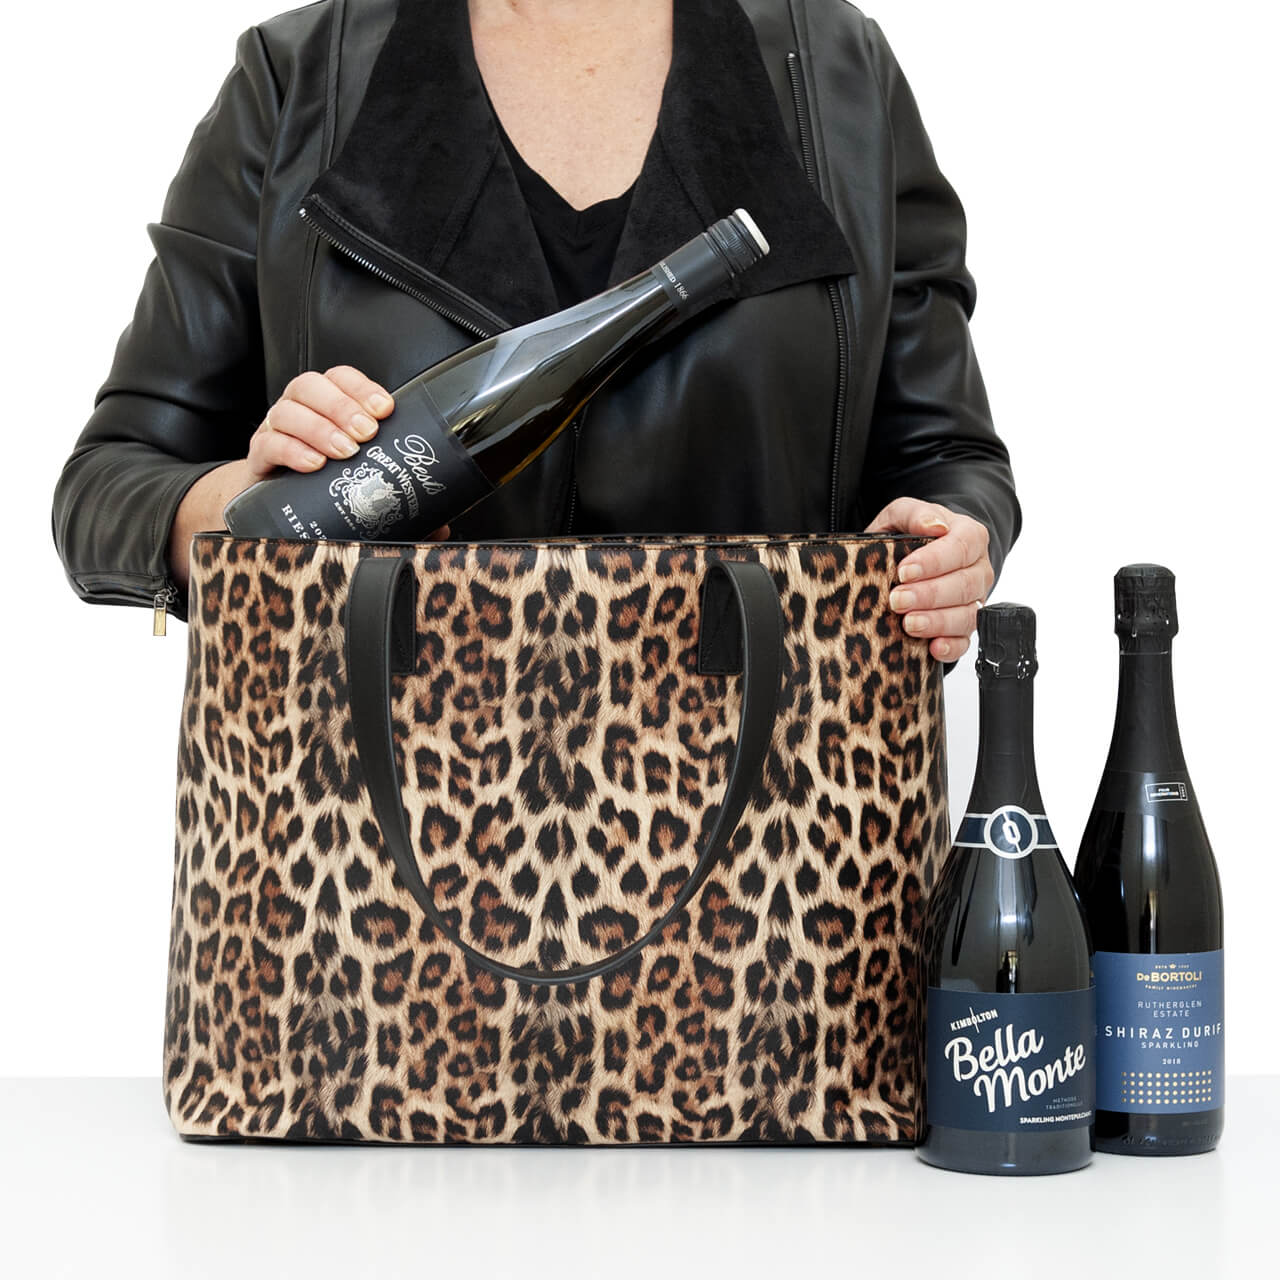 Manuela Cool Clutch Large Cooler Bag Tote - Cool Clutch cooler bag handbag insulated wine lunch handbags